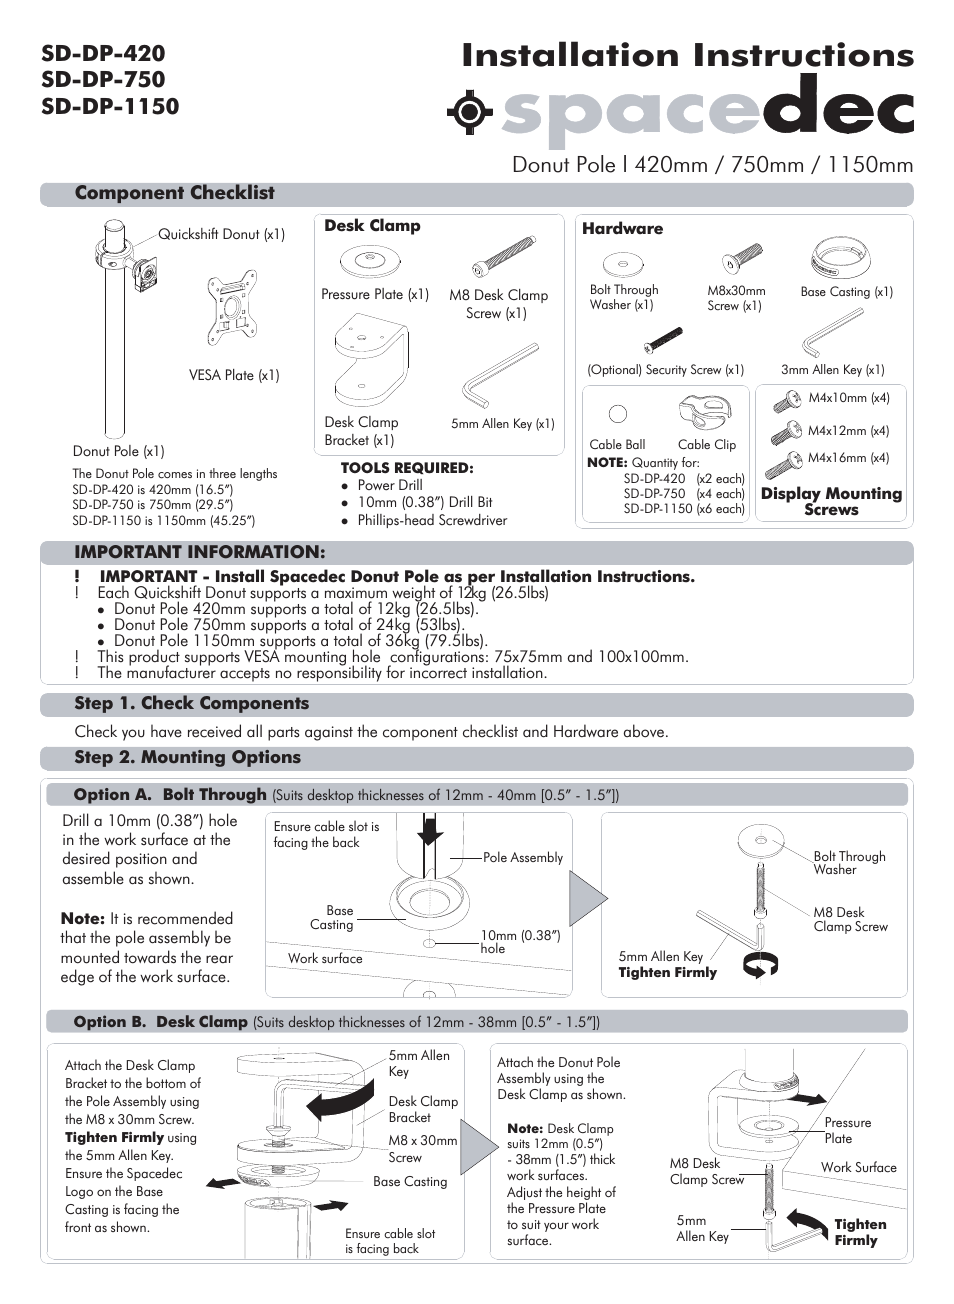 Spacedec SD-DP-1150 Installation manual